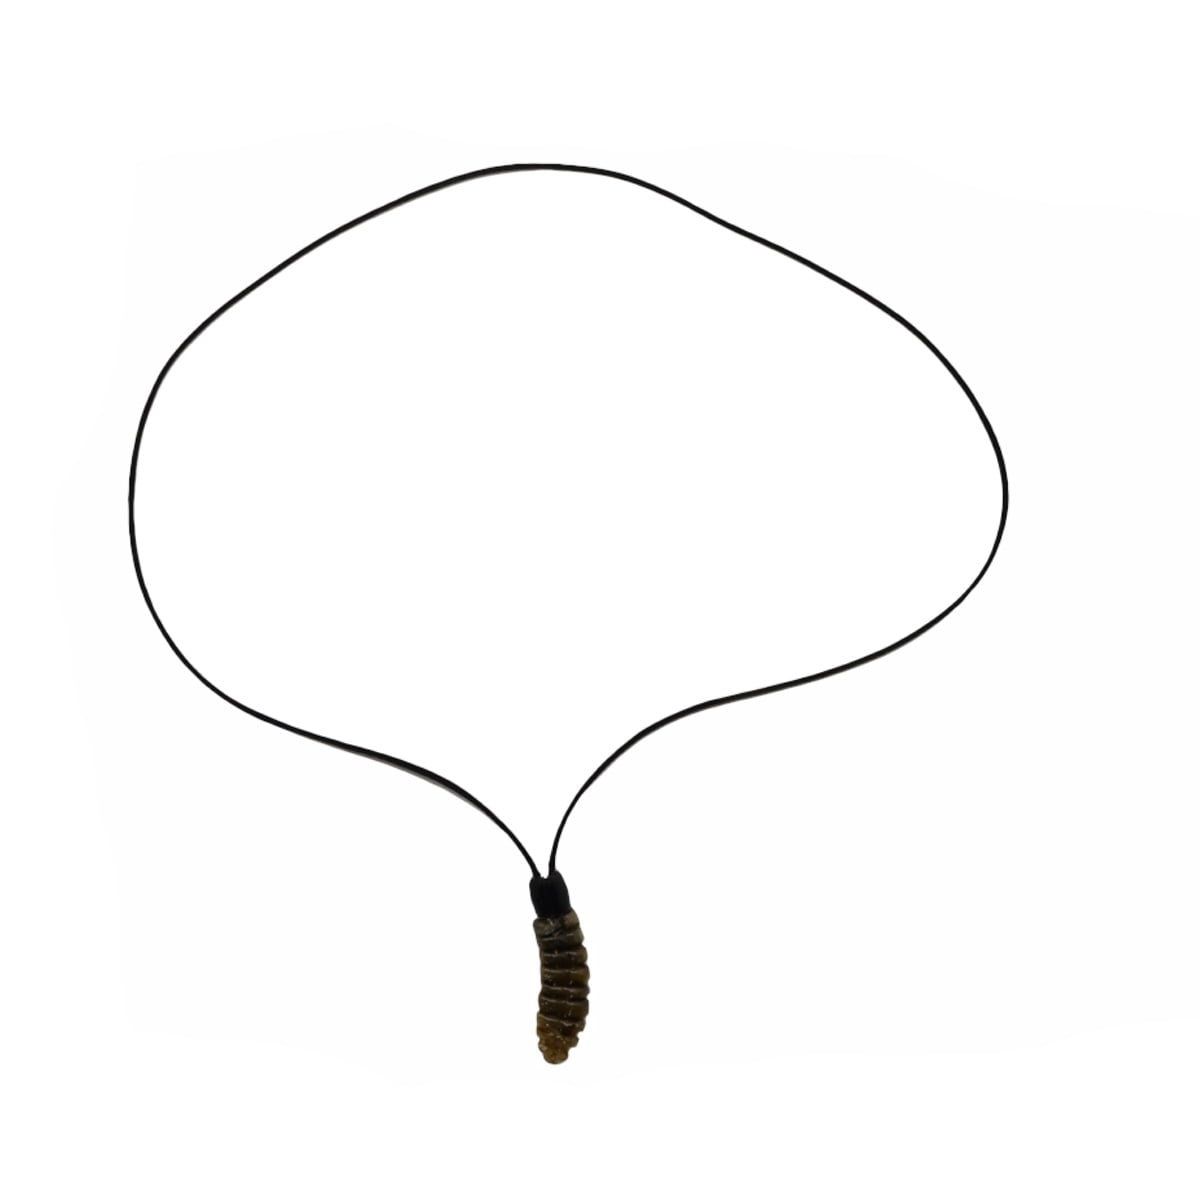 Vintage Rattlesnake Rattle 9 Section Snake Tail Pendant Necklace Charm